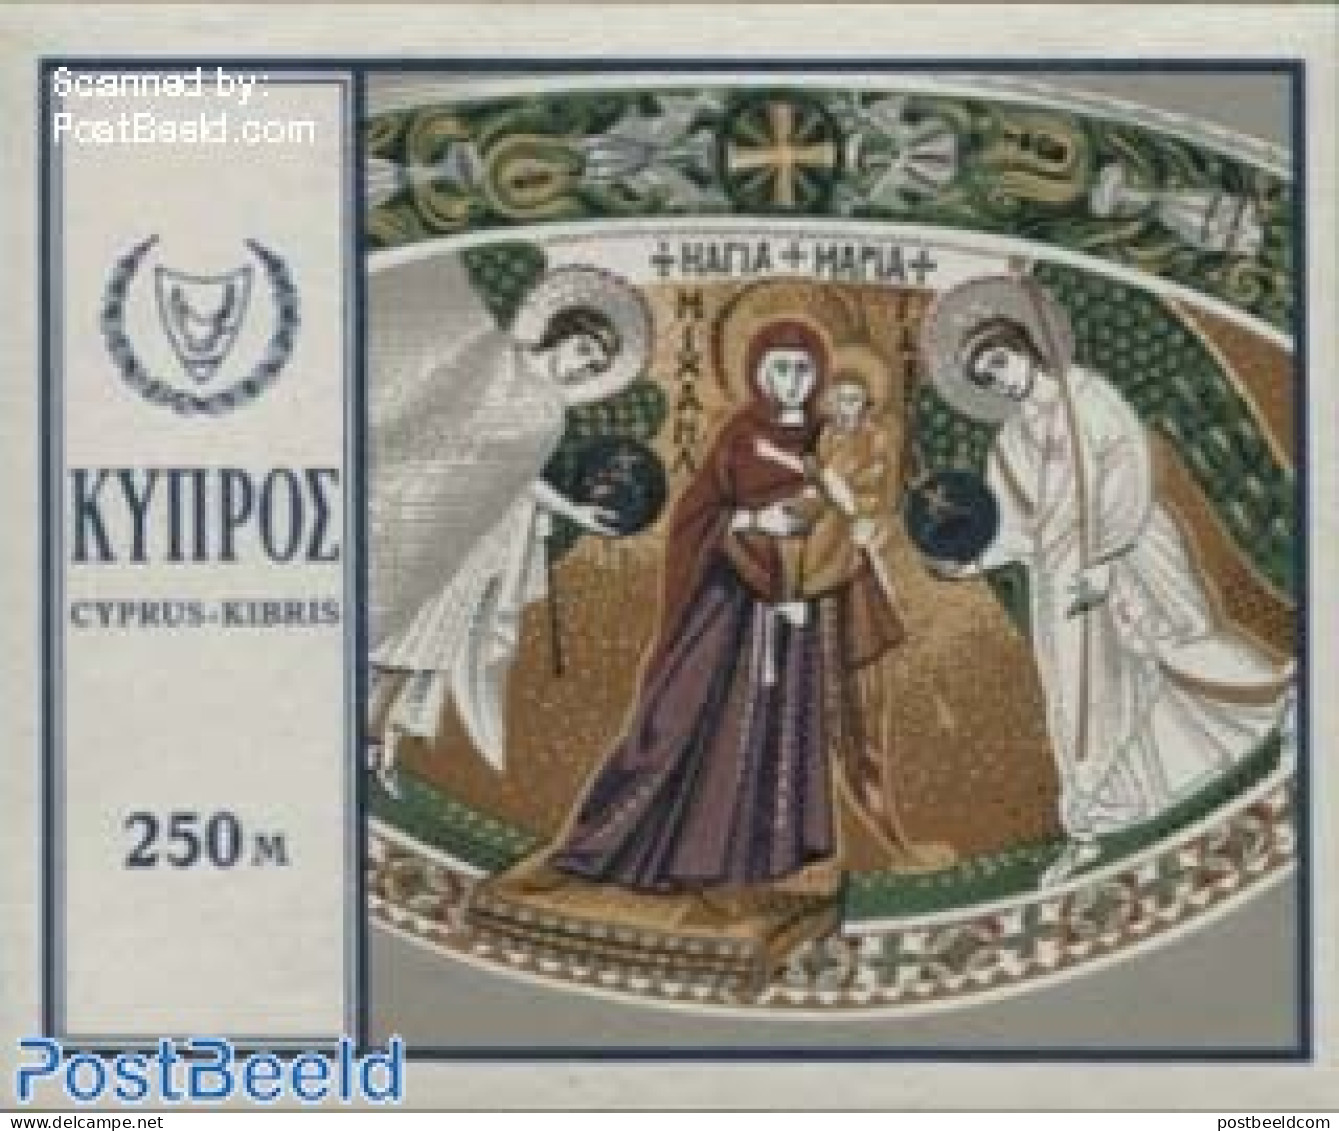 Cyprus 1969 Christmas S/s, Mint NH, Religion - Angels - Christmas - Nuevos